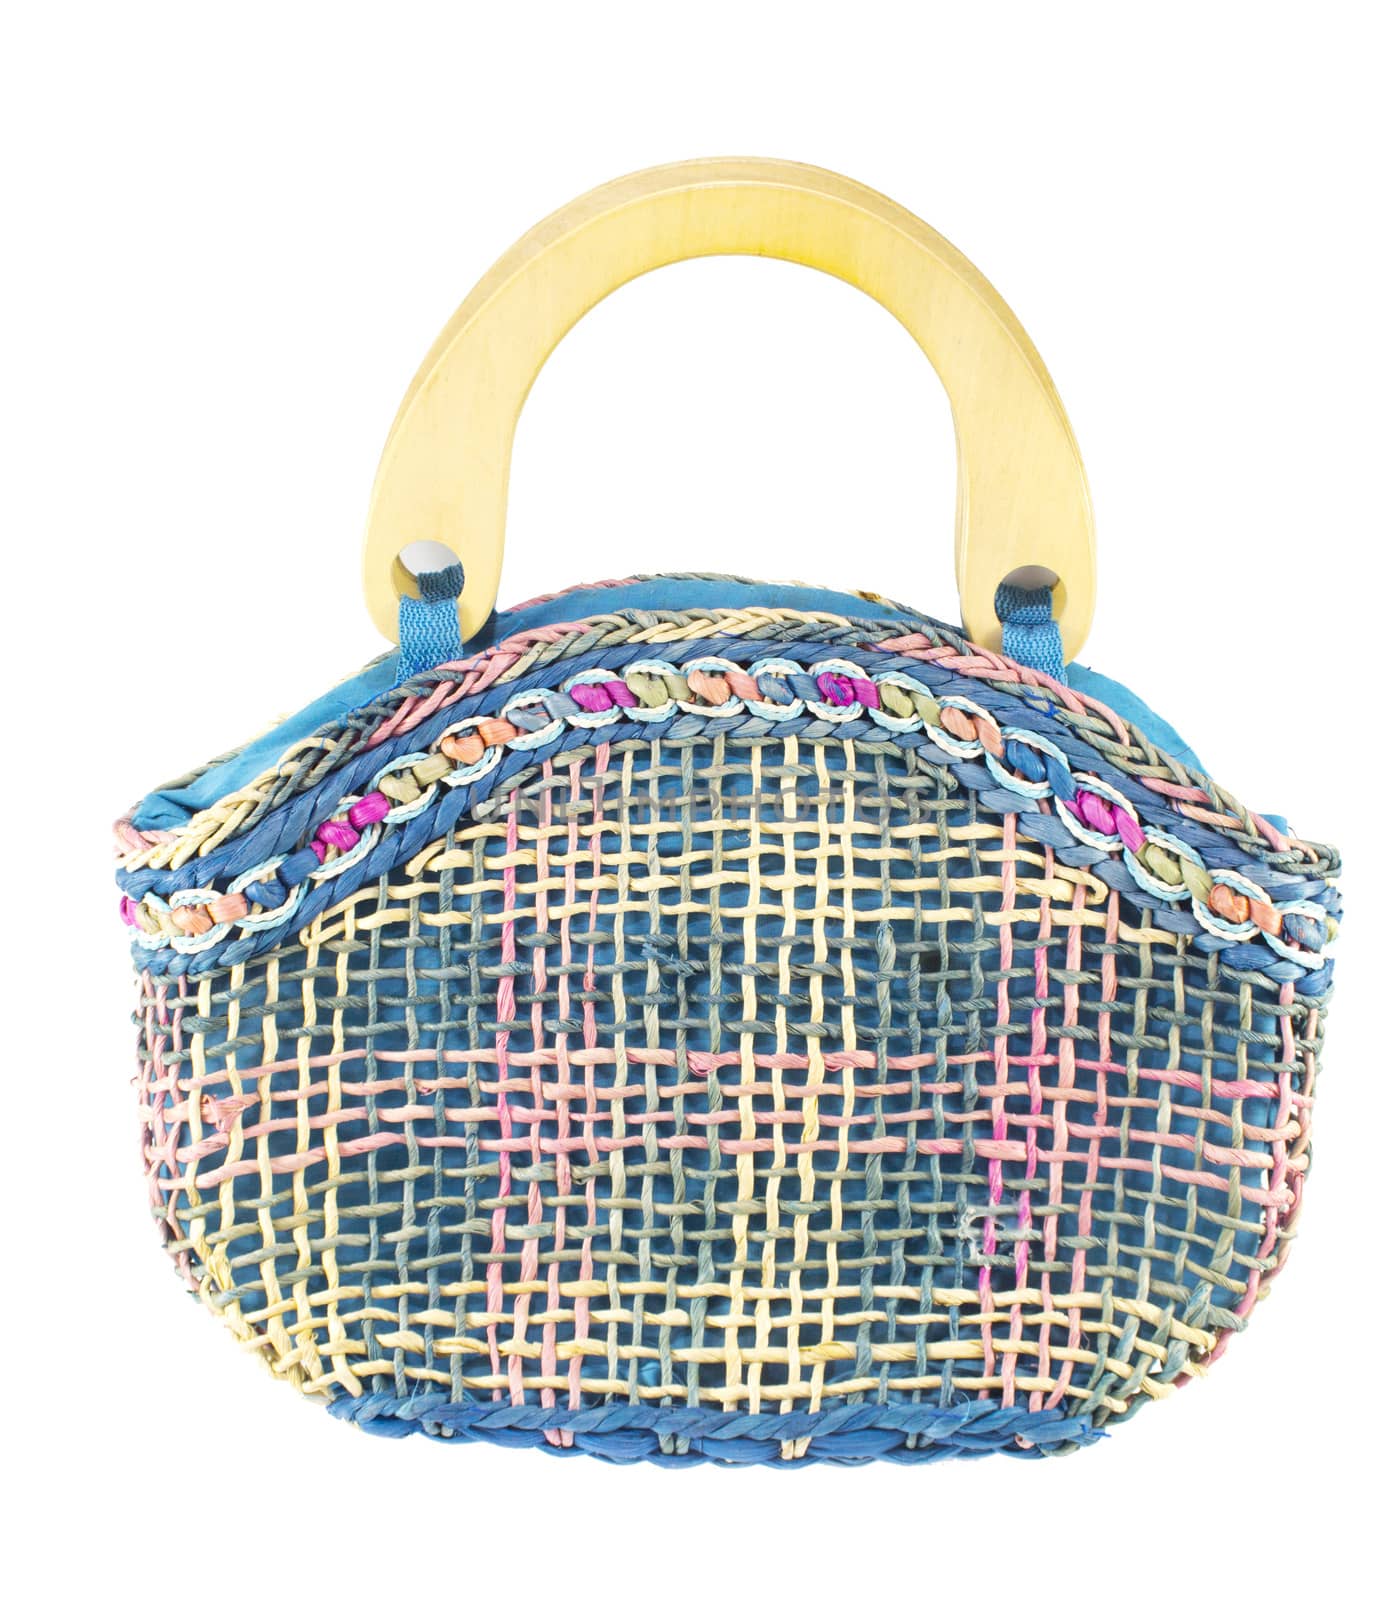 Handmade wicker bag by designsstock